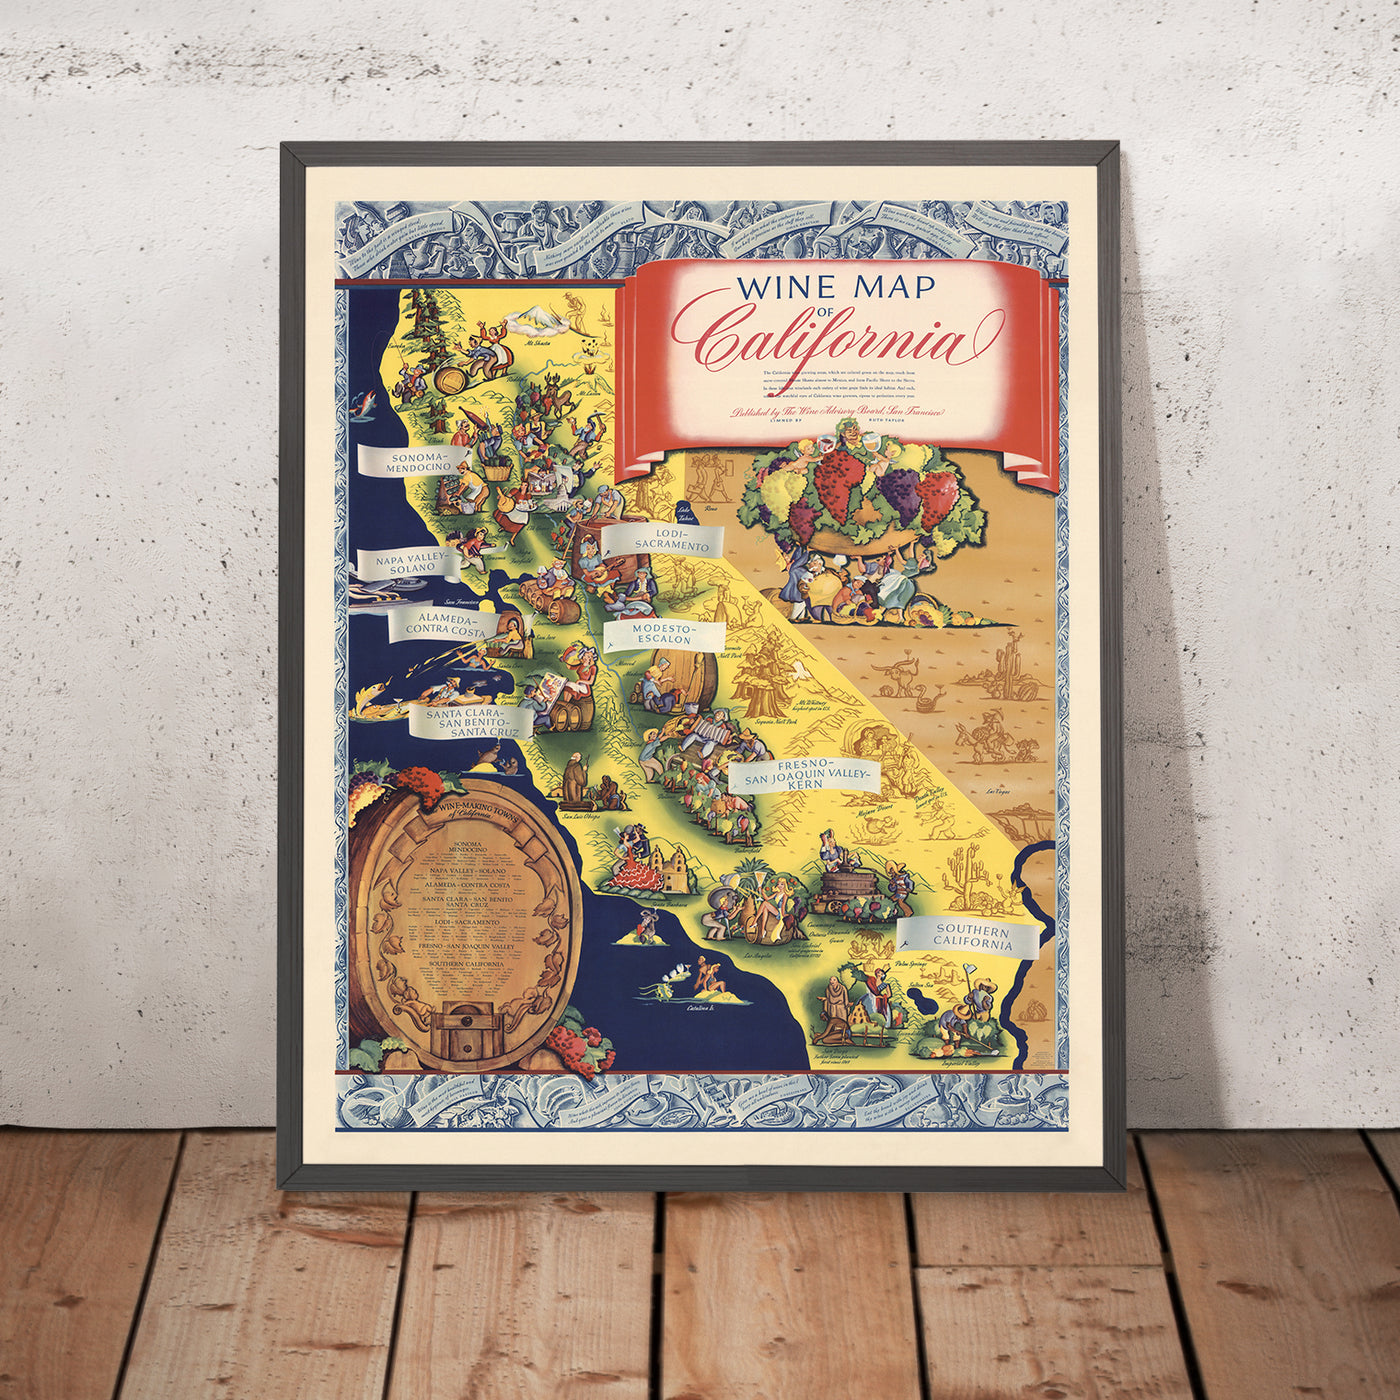 Old Map of California Wine Regions, 1935: Wine-Making, Vineyards, Sonoma, Napa Valley, Vignettes